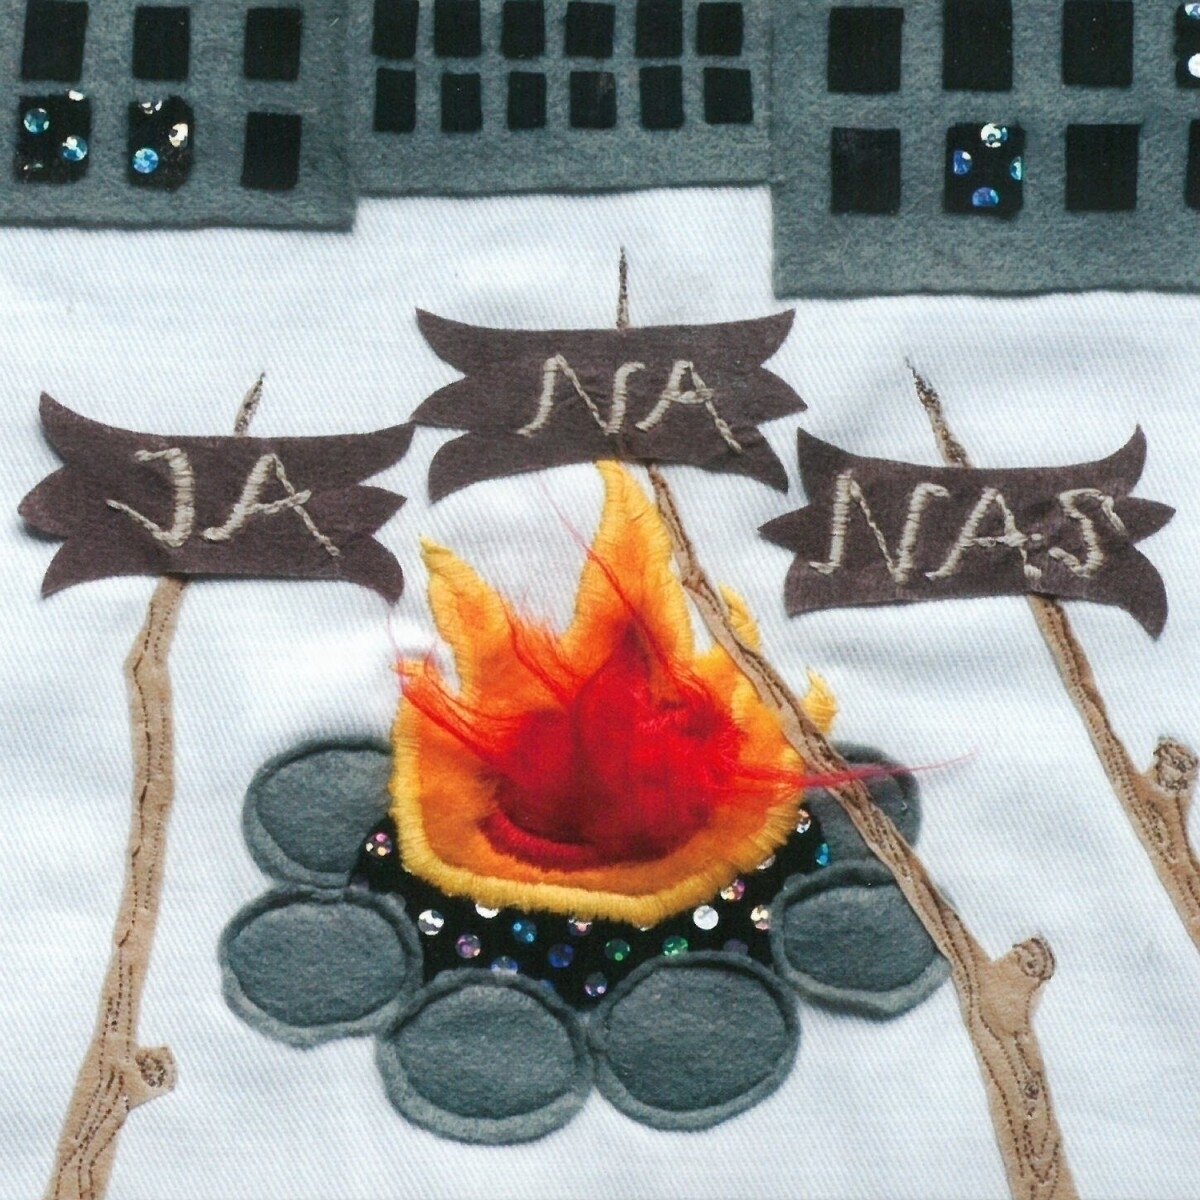 Vinylplade Jananas - Jananas (LP)